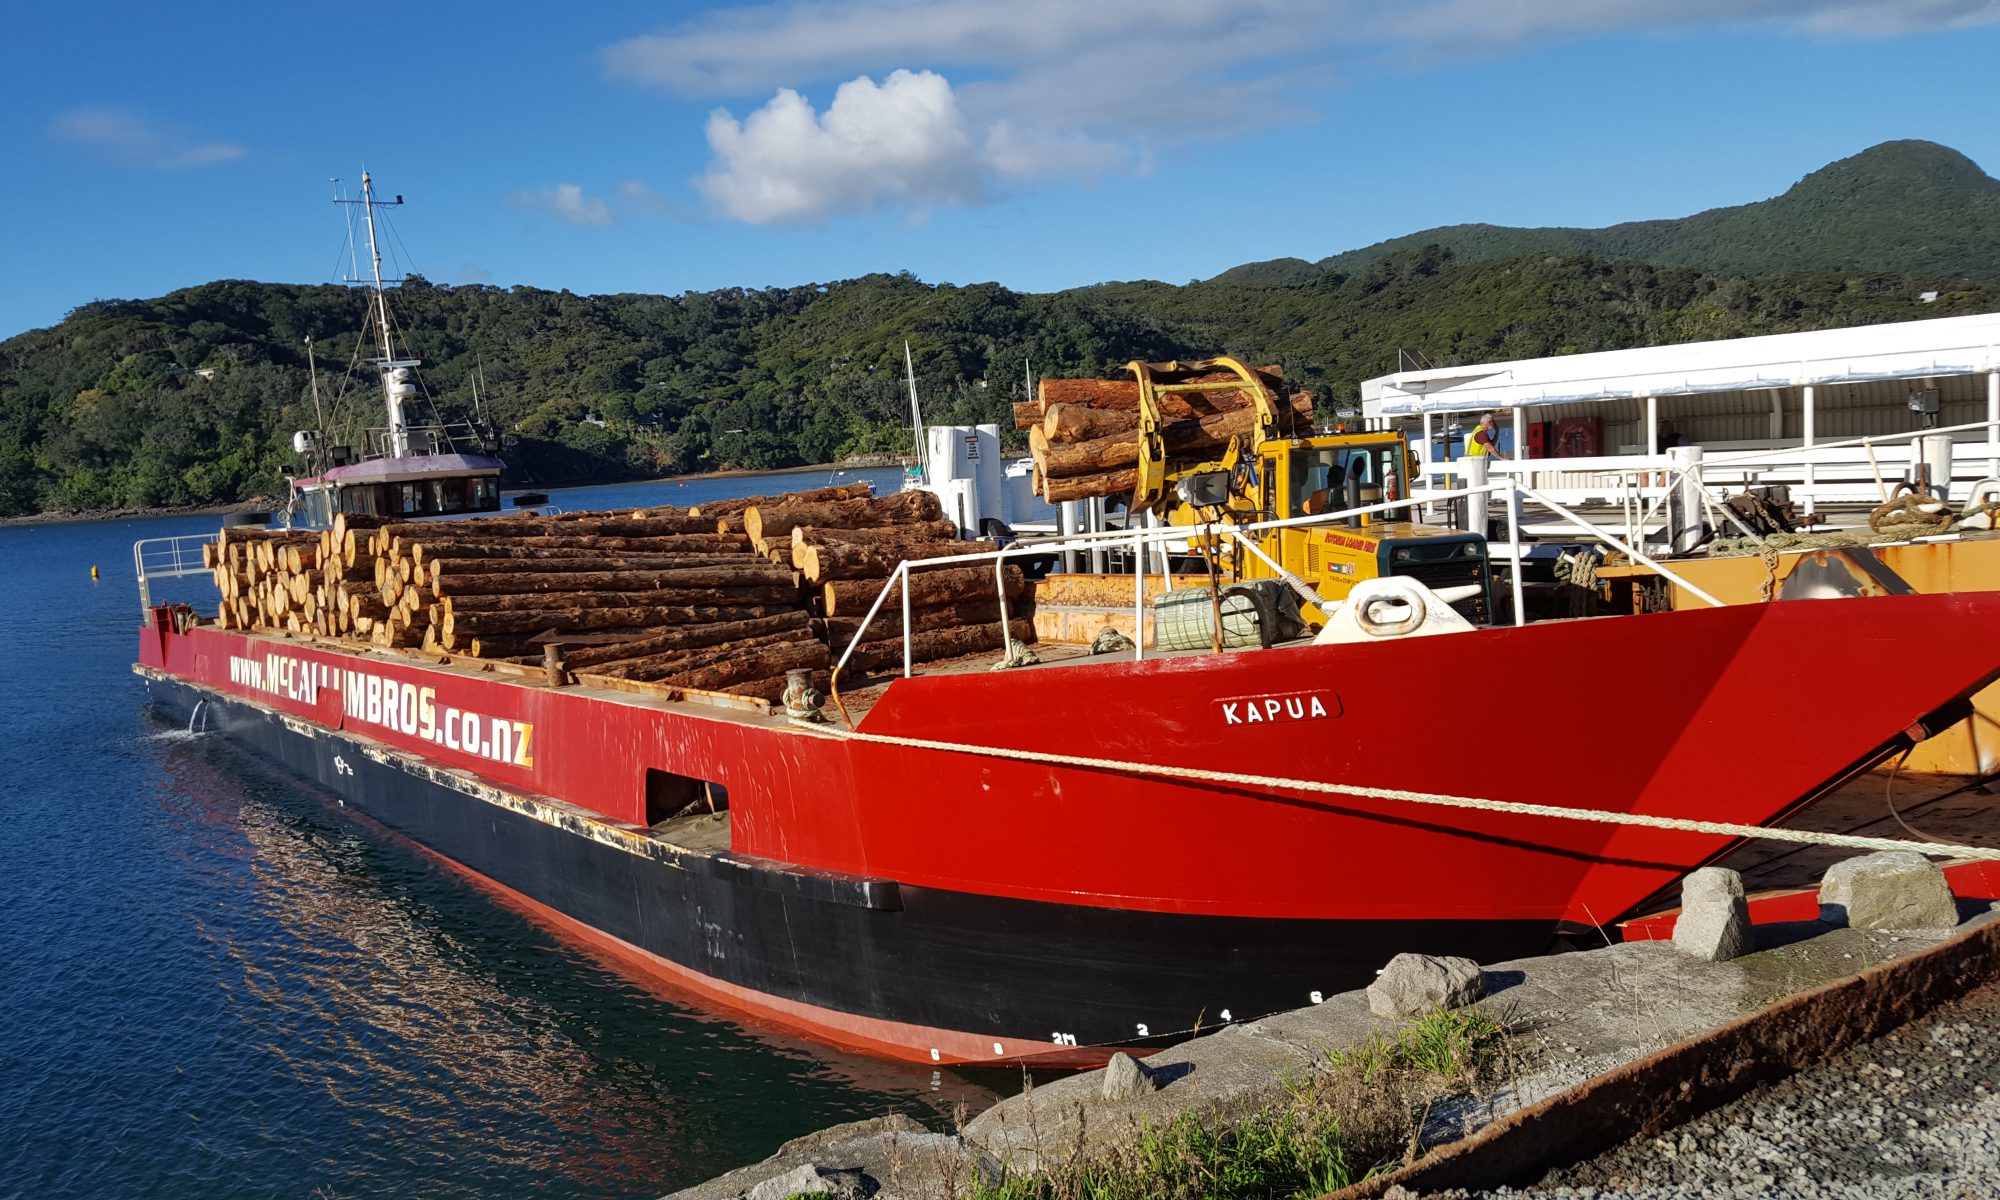 Kapua motorised barge contract transport of logs in Haurake Gulf